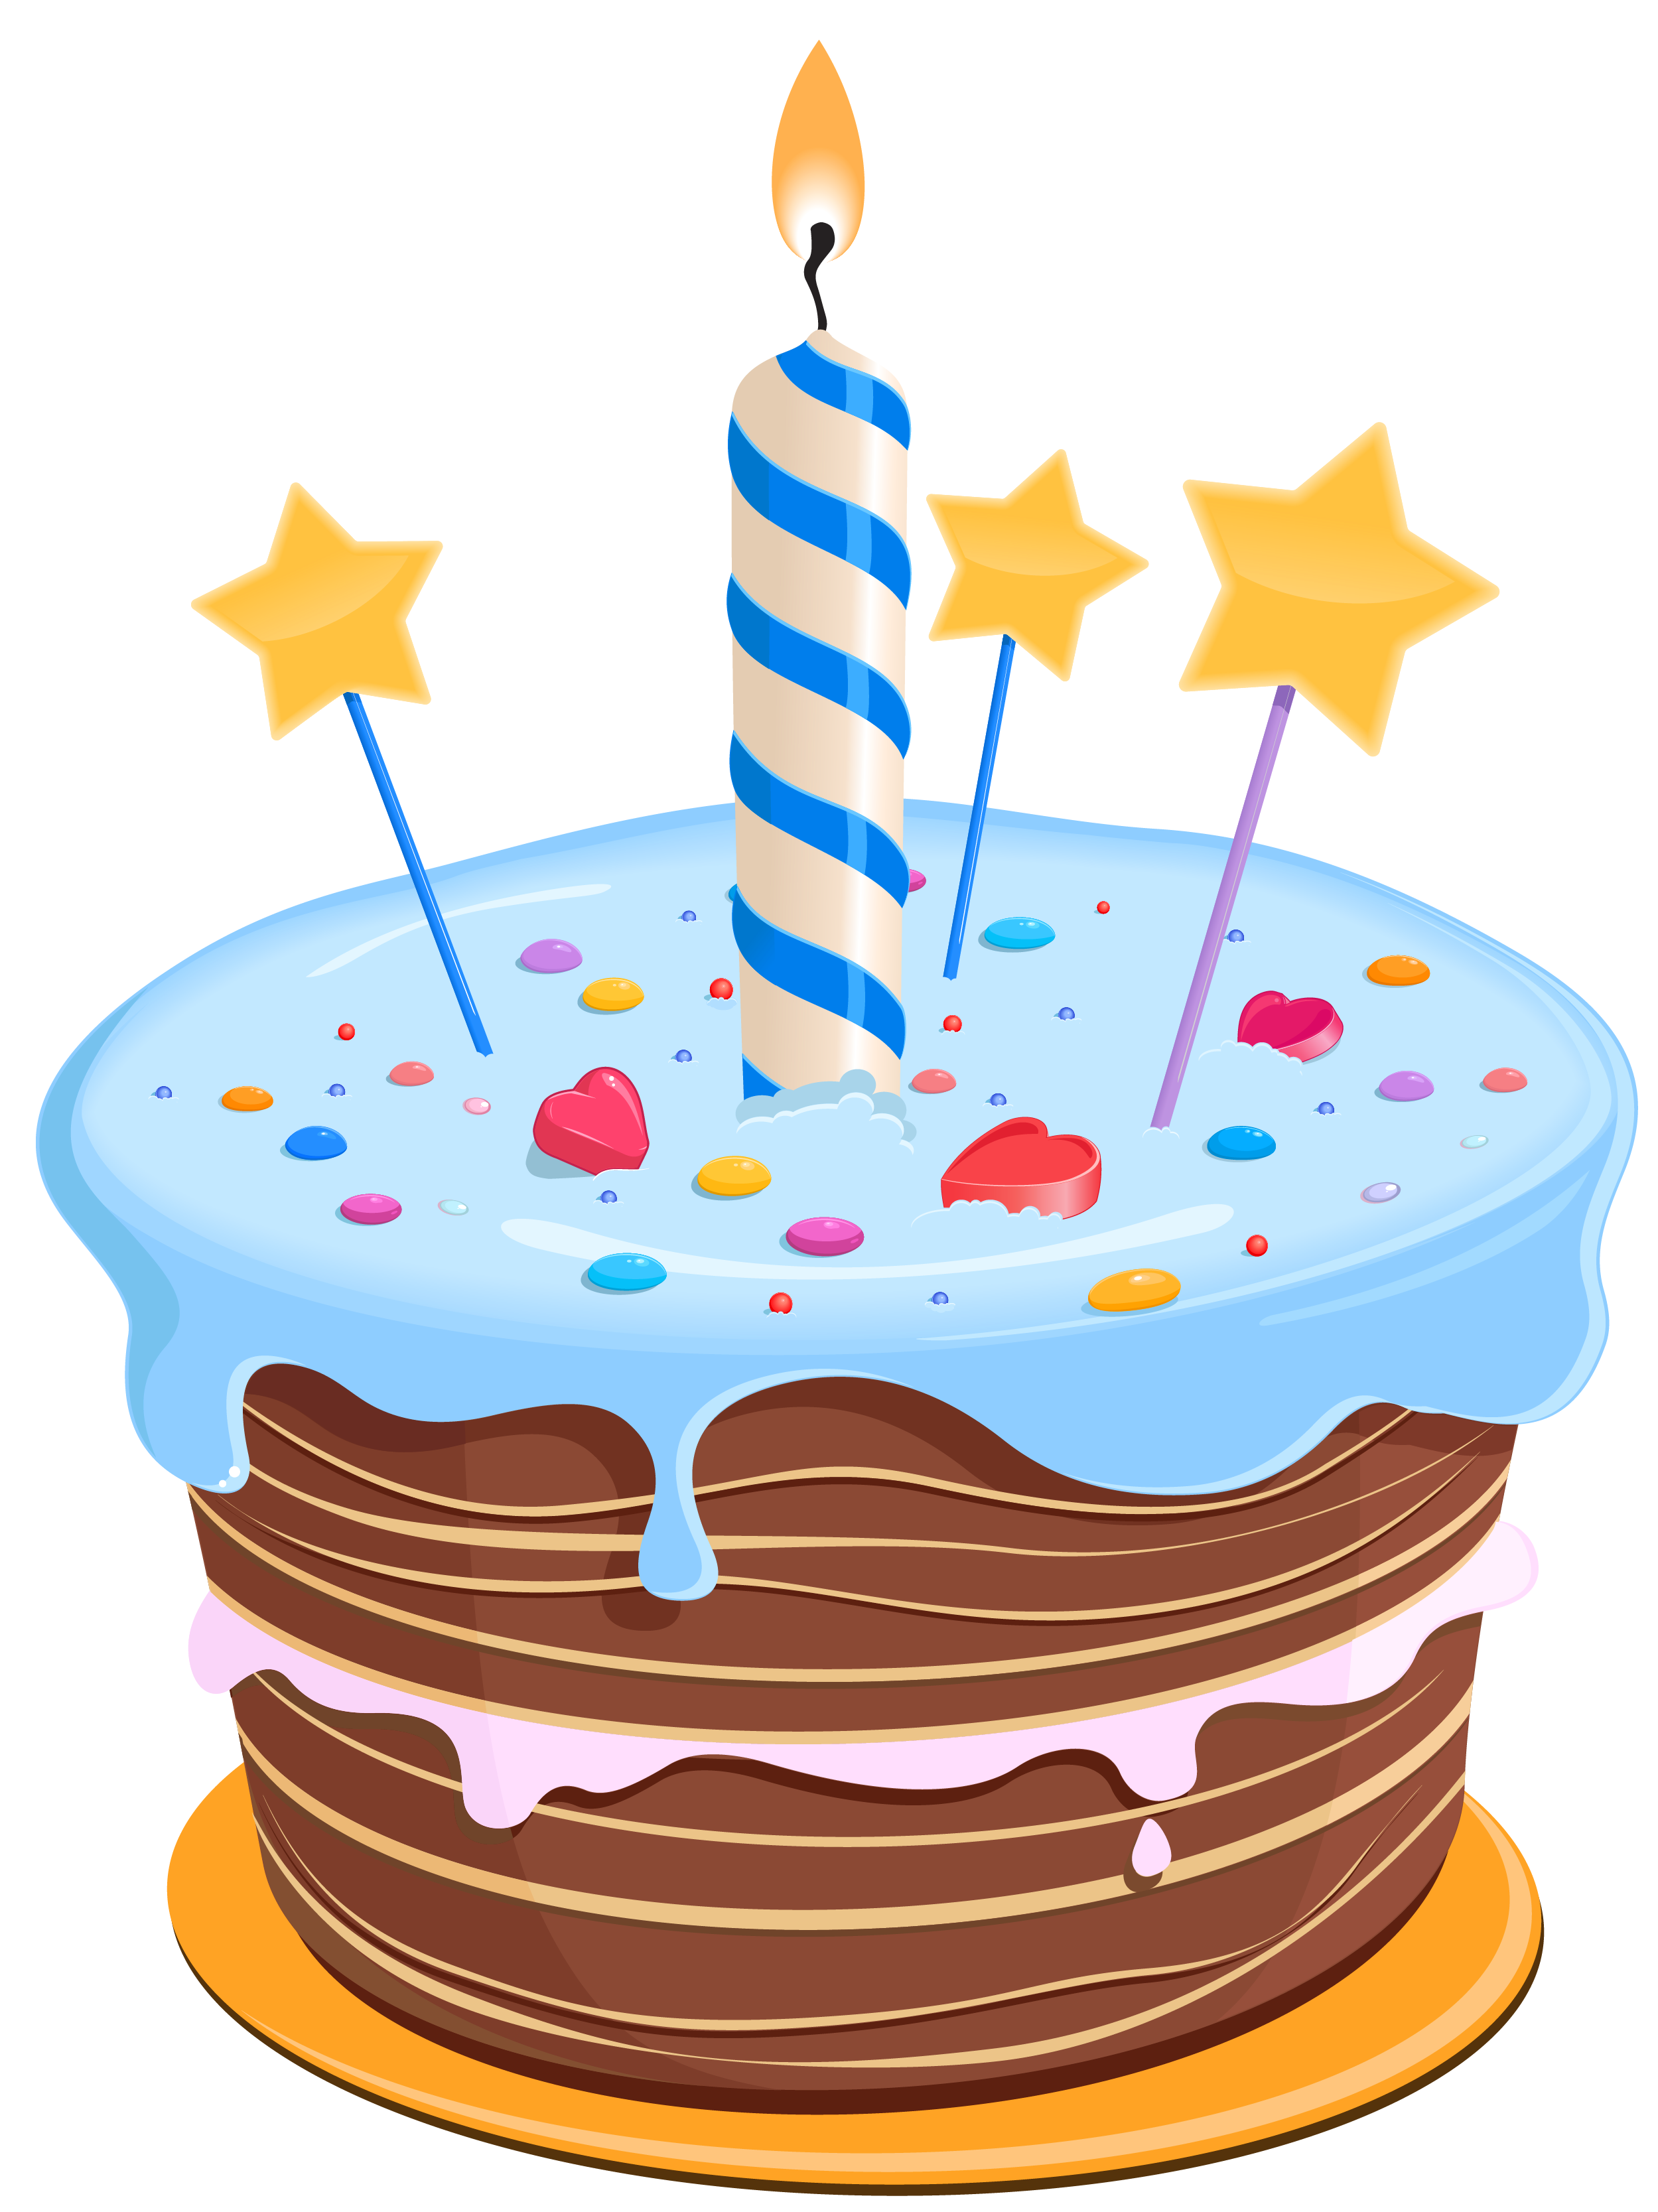 27+ Beautiful Image of Cartoon Birthday Cake - davemelillo.com | Cartoon  birthday cake, Cartoon cake, Art birthday cake